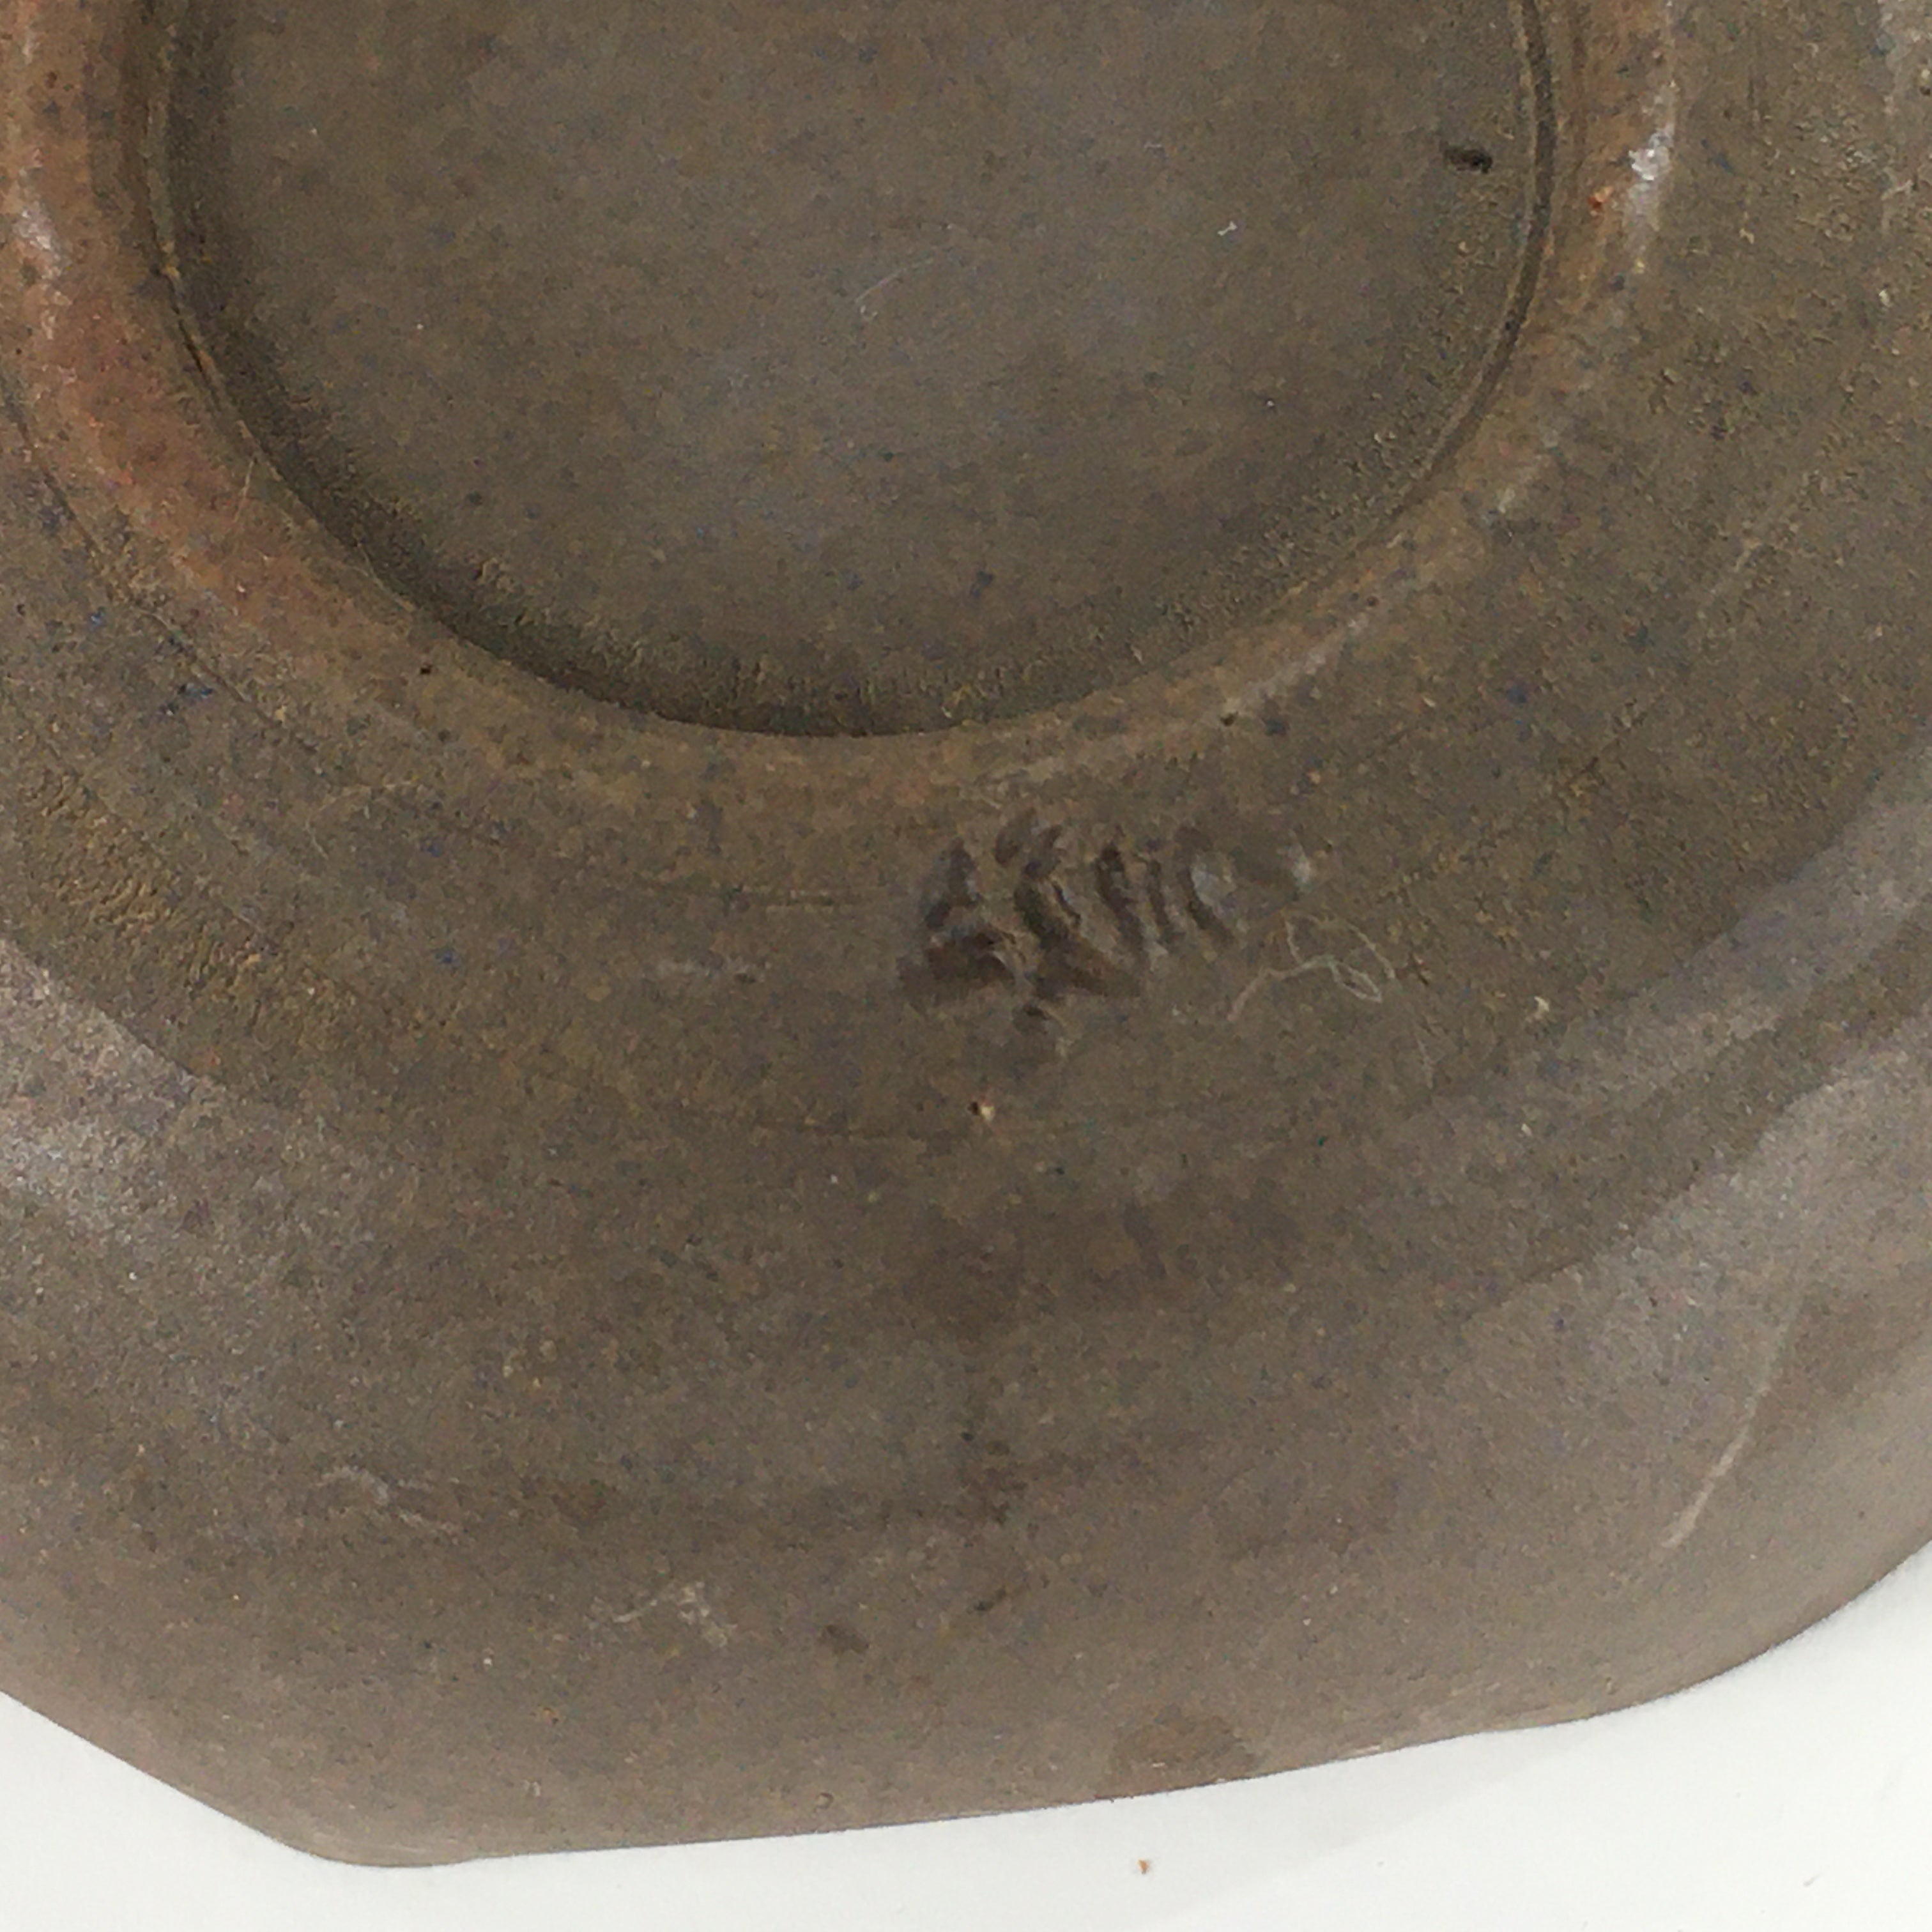 Japanese Ceramic Small Bowl Vtg Pottery Yakimono Brown Blue Kobachi PP798